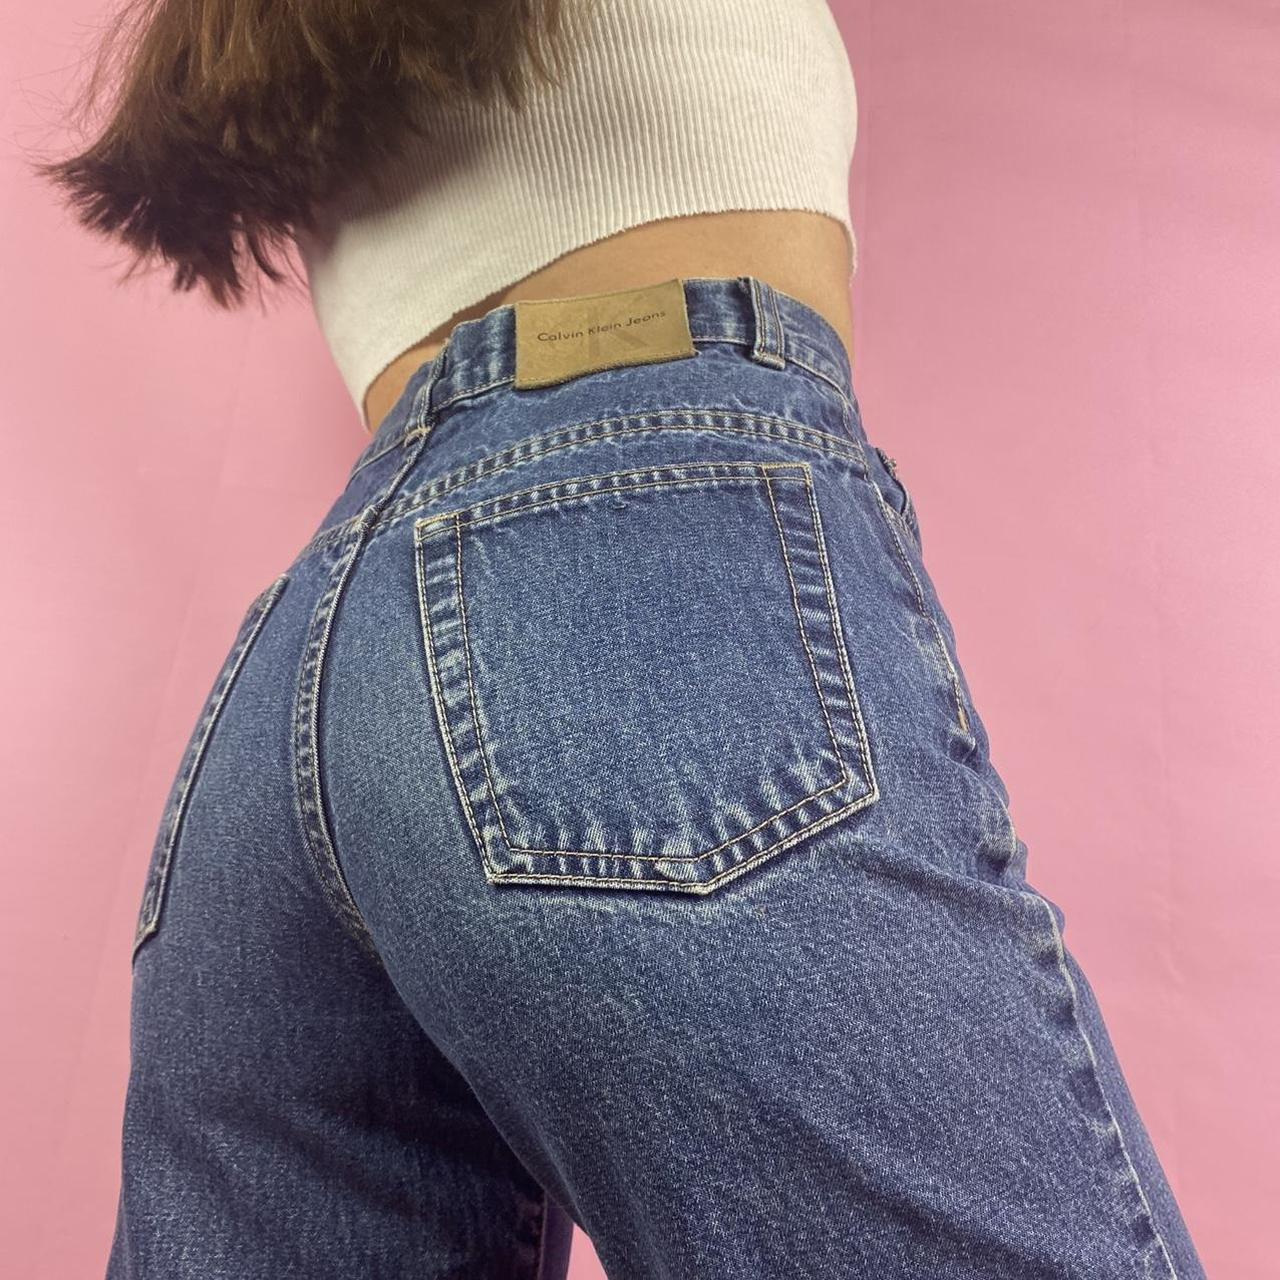 Calvin Klein Jeans Women's Shorts